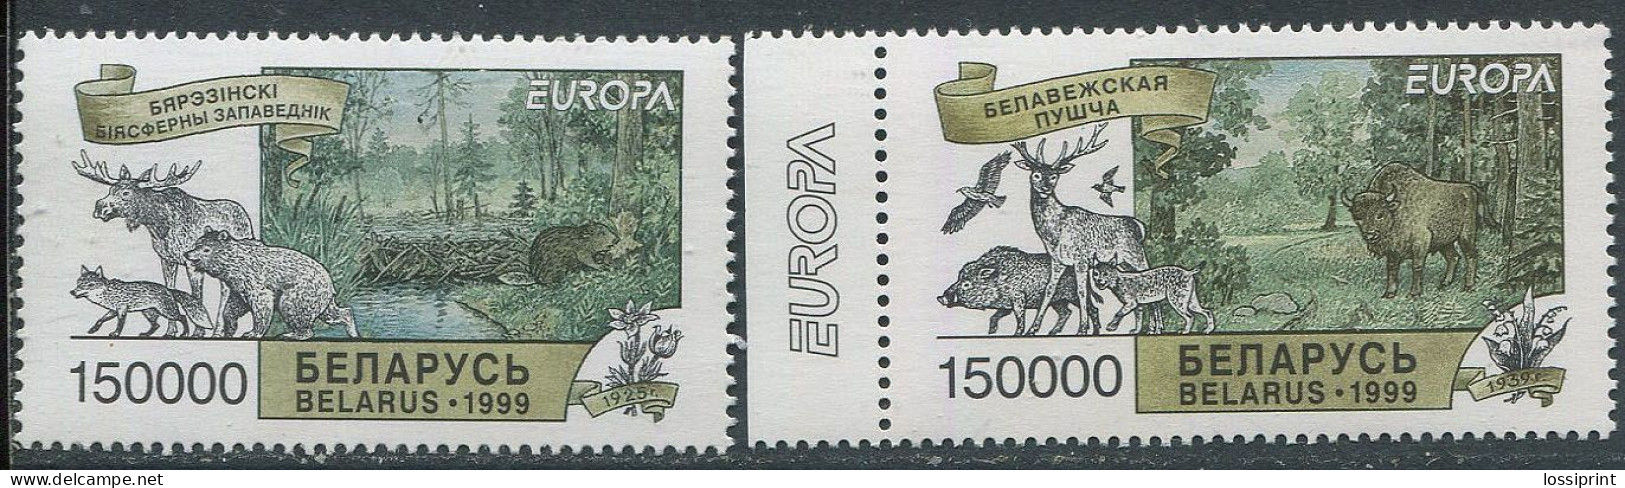 Belarus:Unused Stamps EUROPA Cept 1999, Animals, MNH - Belarus